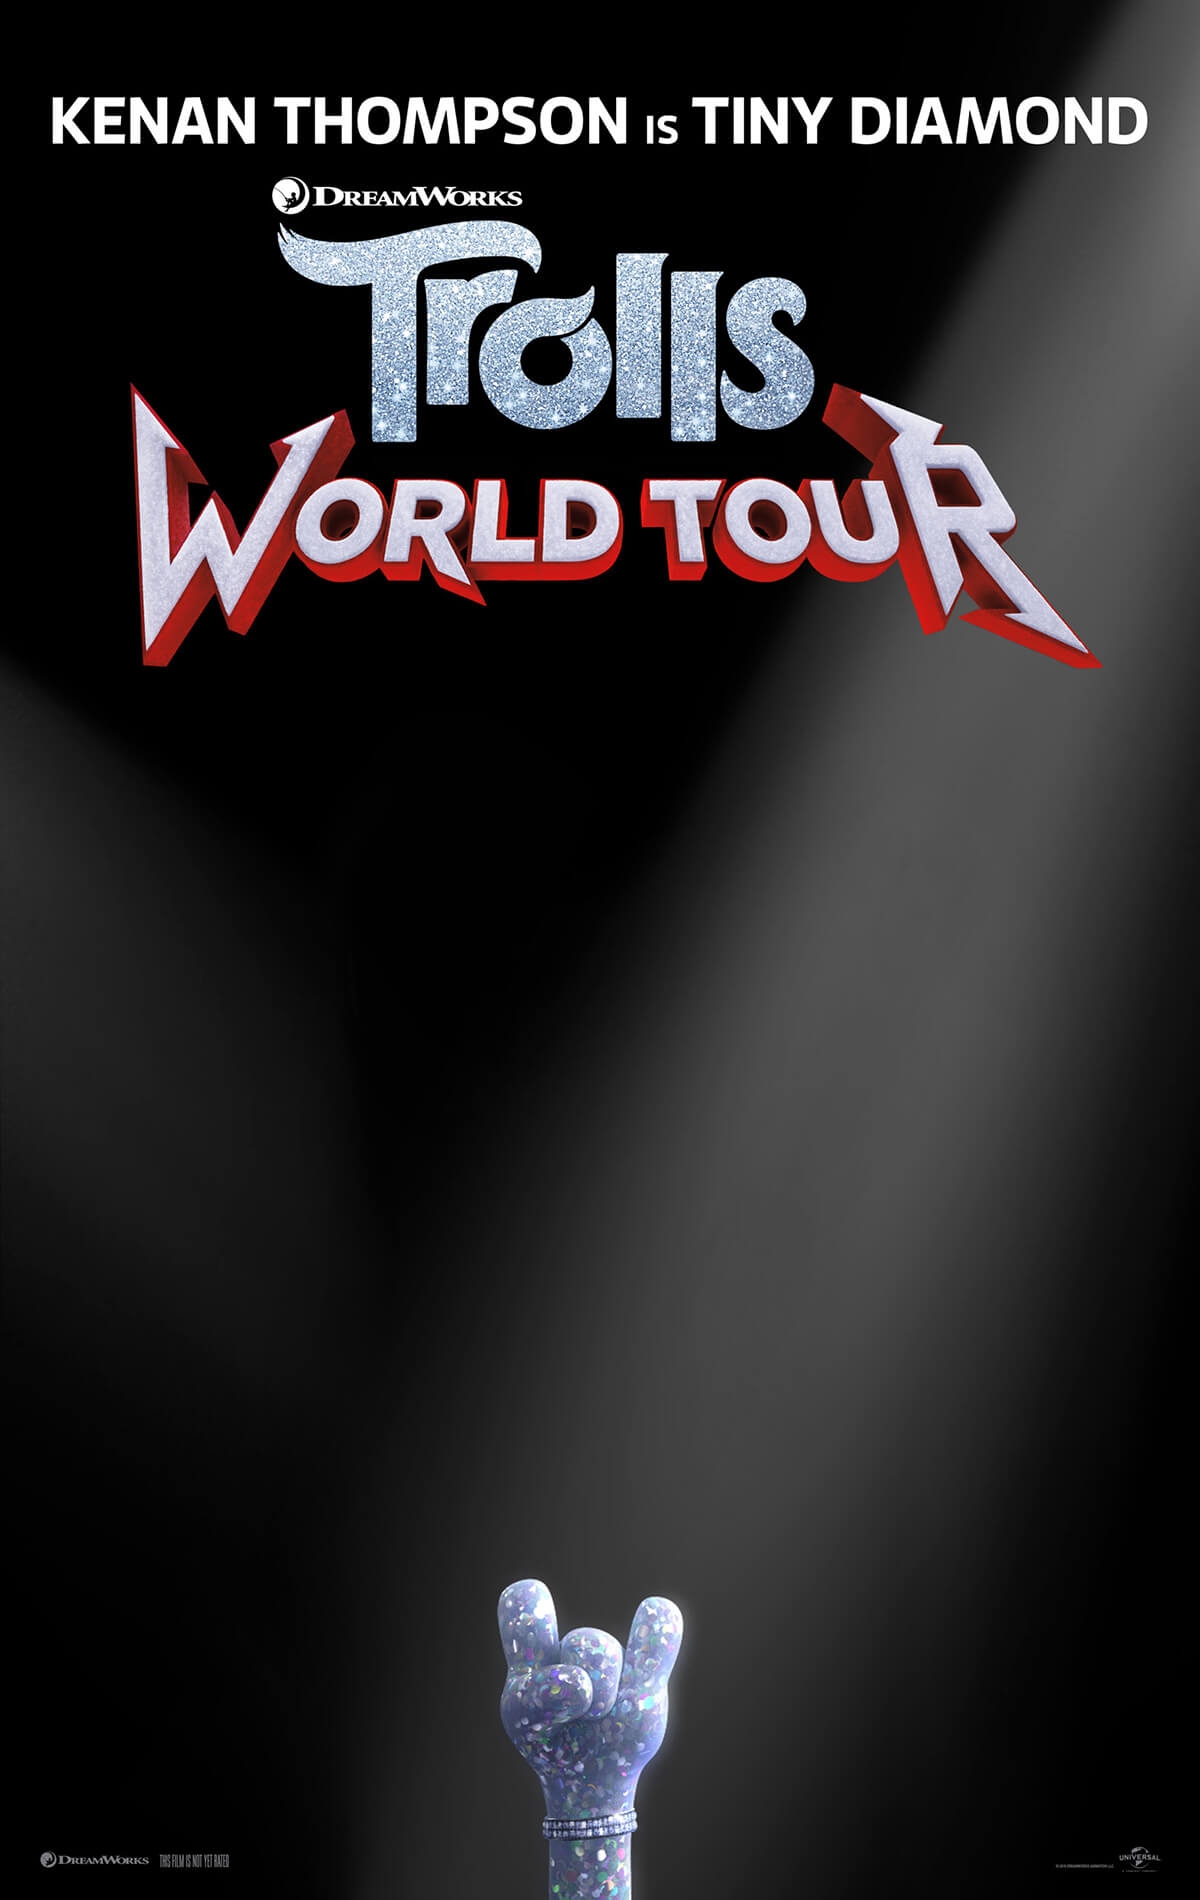 Trolls World Tour Poster Wallpapers